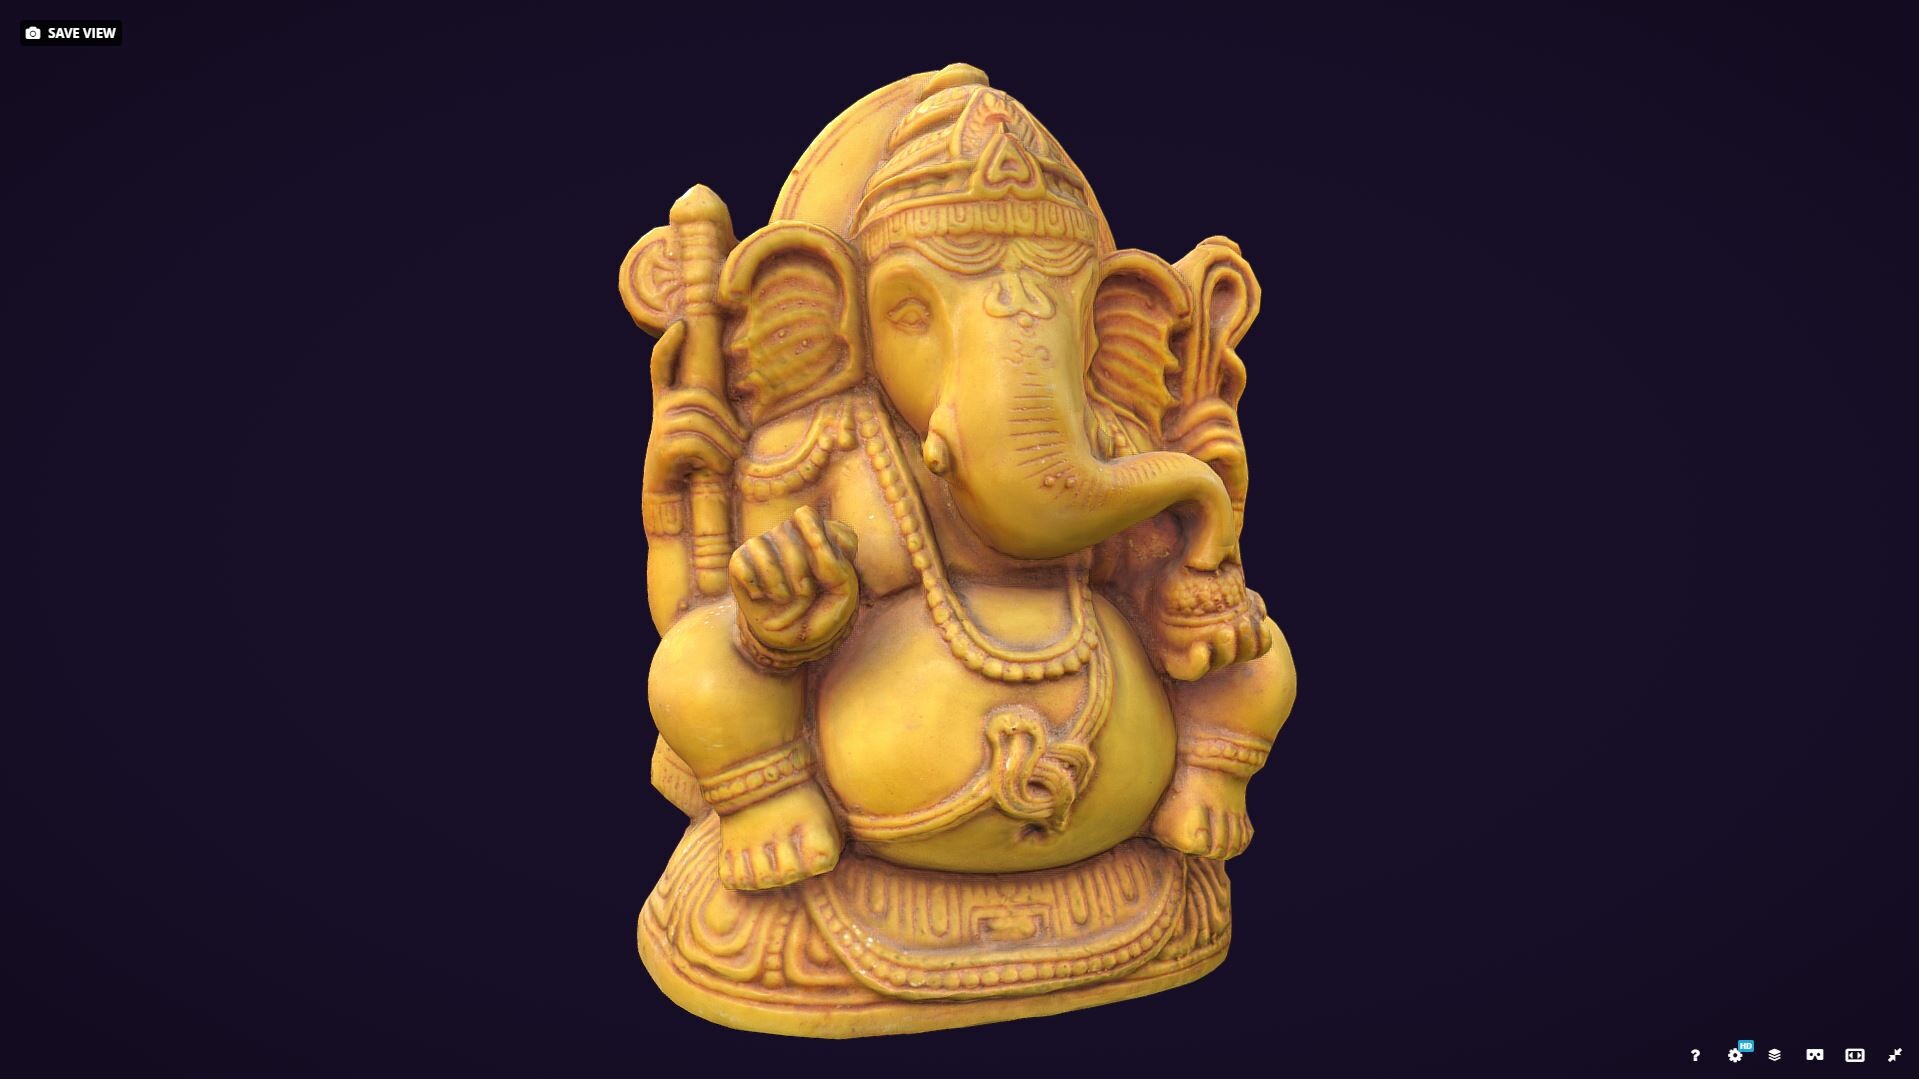 Alok Kumar - Lord Ganesha Souvenir